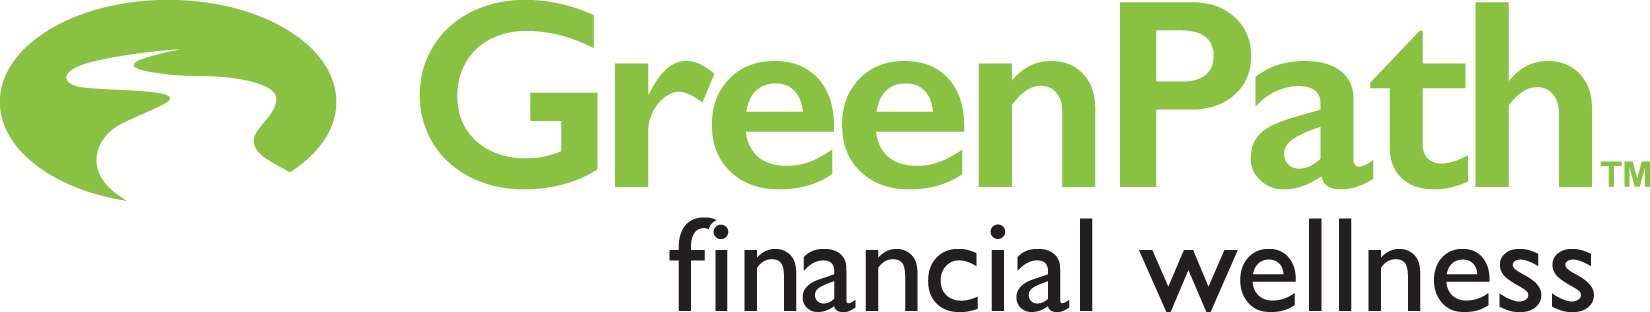 A logo for GreenPath financial wellness.